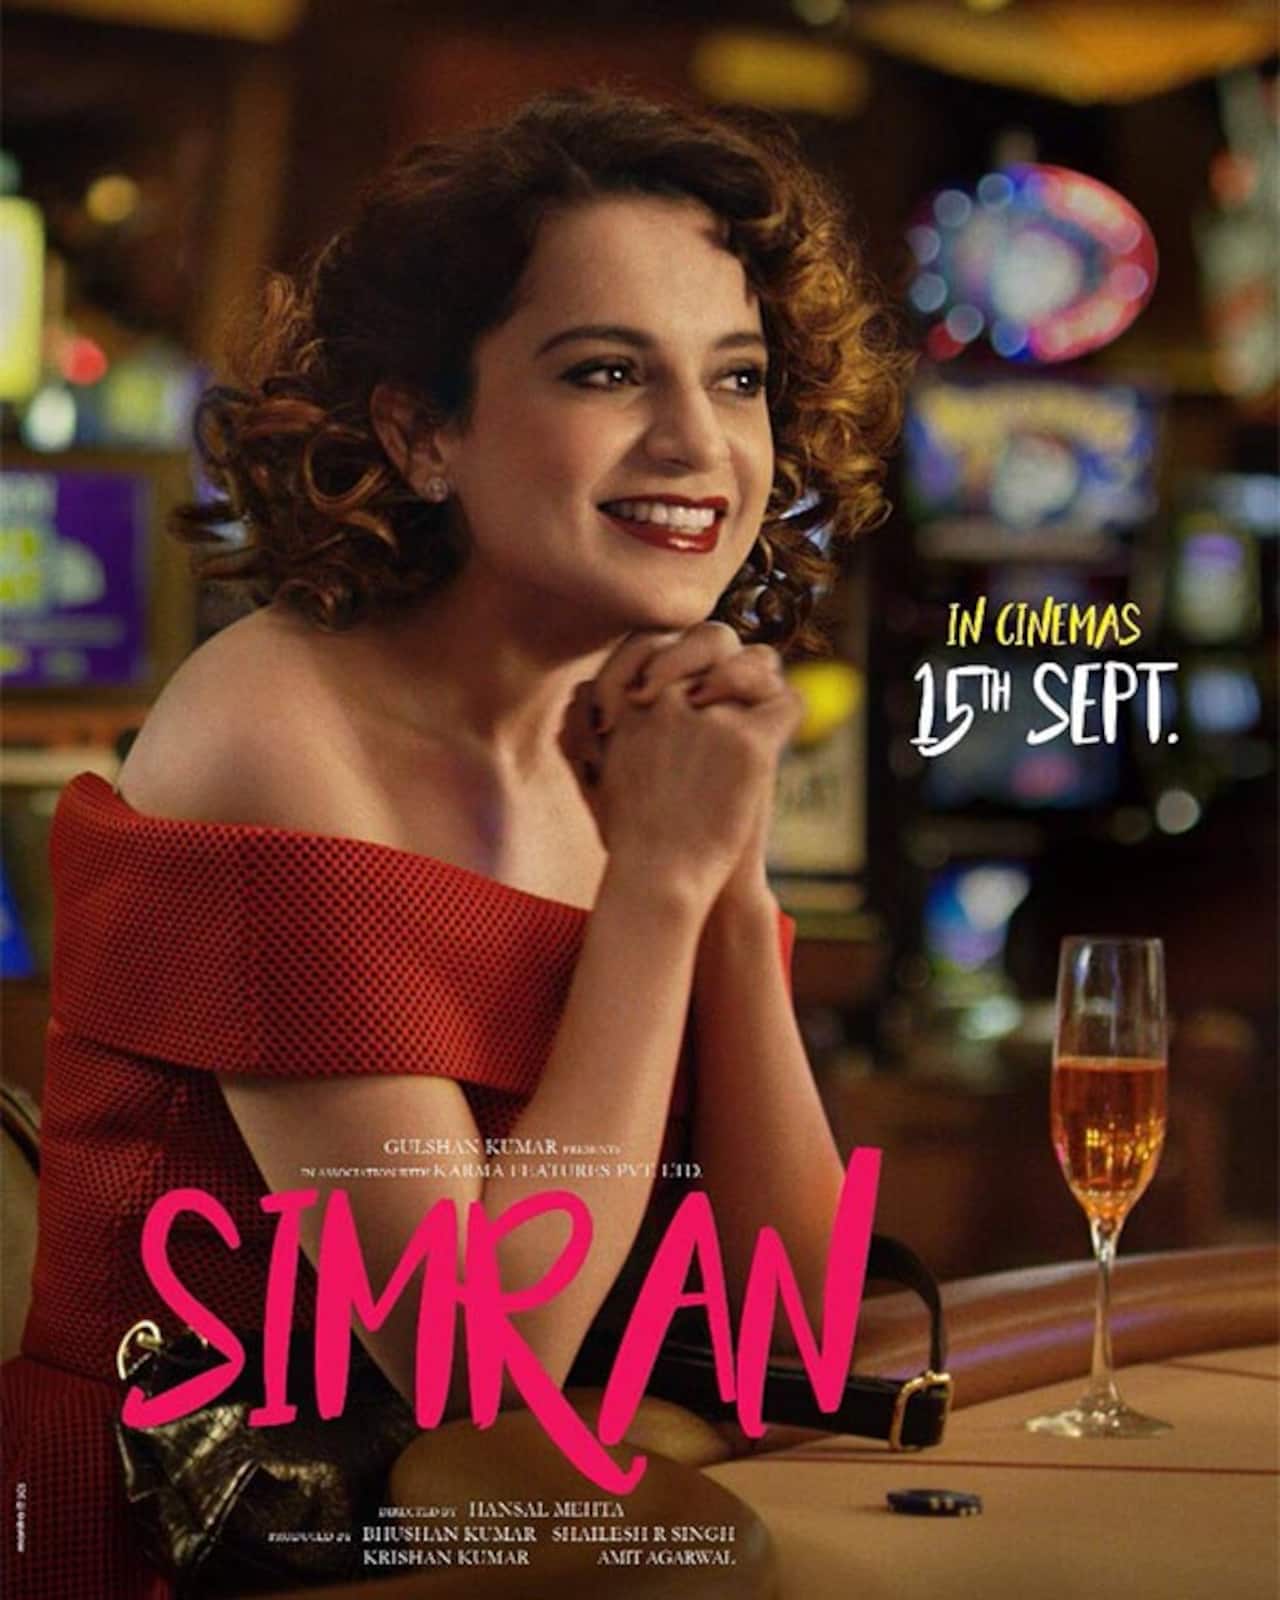 Simran new poster: It's hard to take your eyes off Kangana Ranaut especially when she's flashing that million dollar smile!